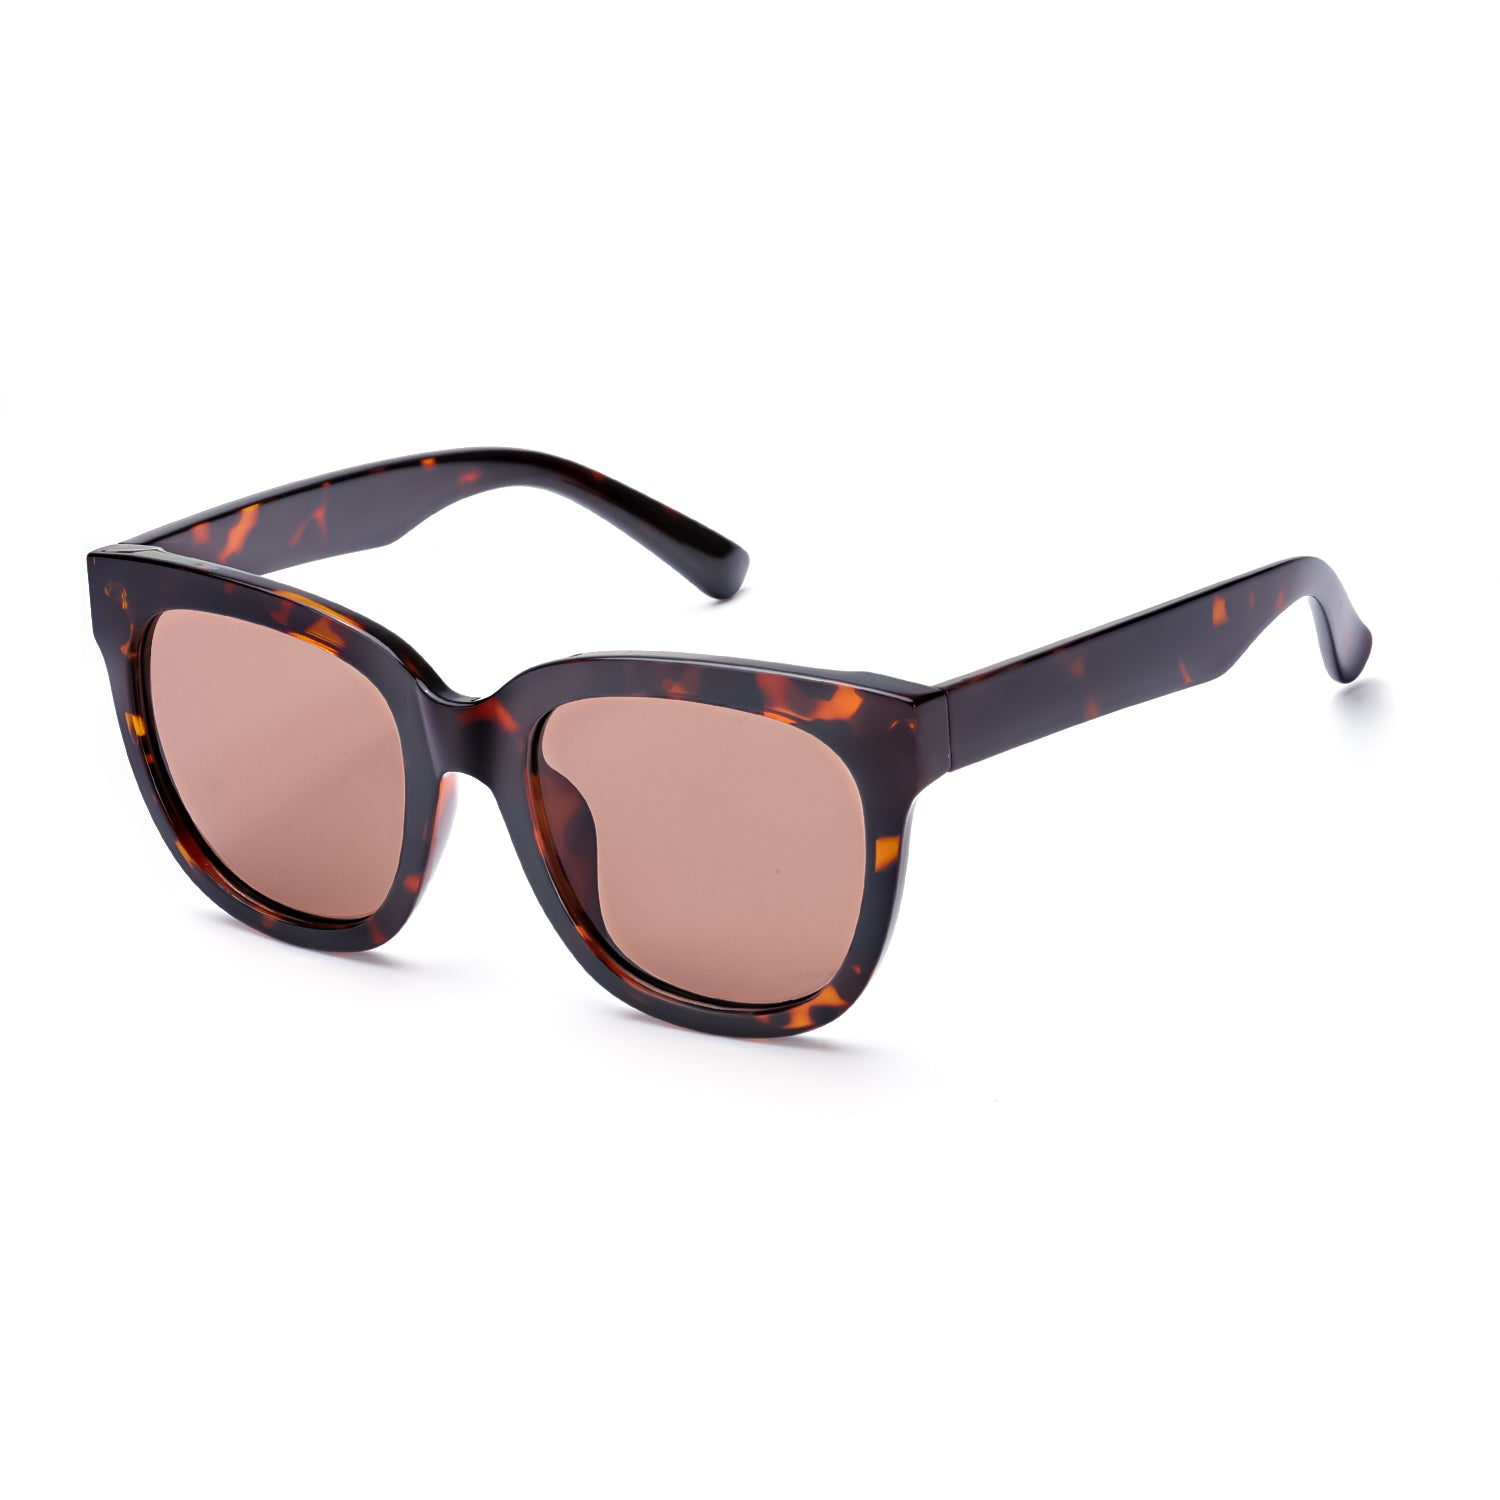 LVIOE Classic Polarized Sunglasses UV400 Mirrored Glasses - LVIOE